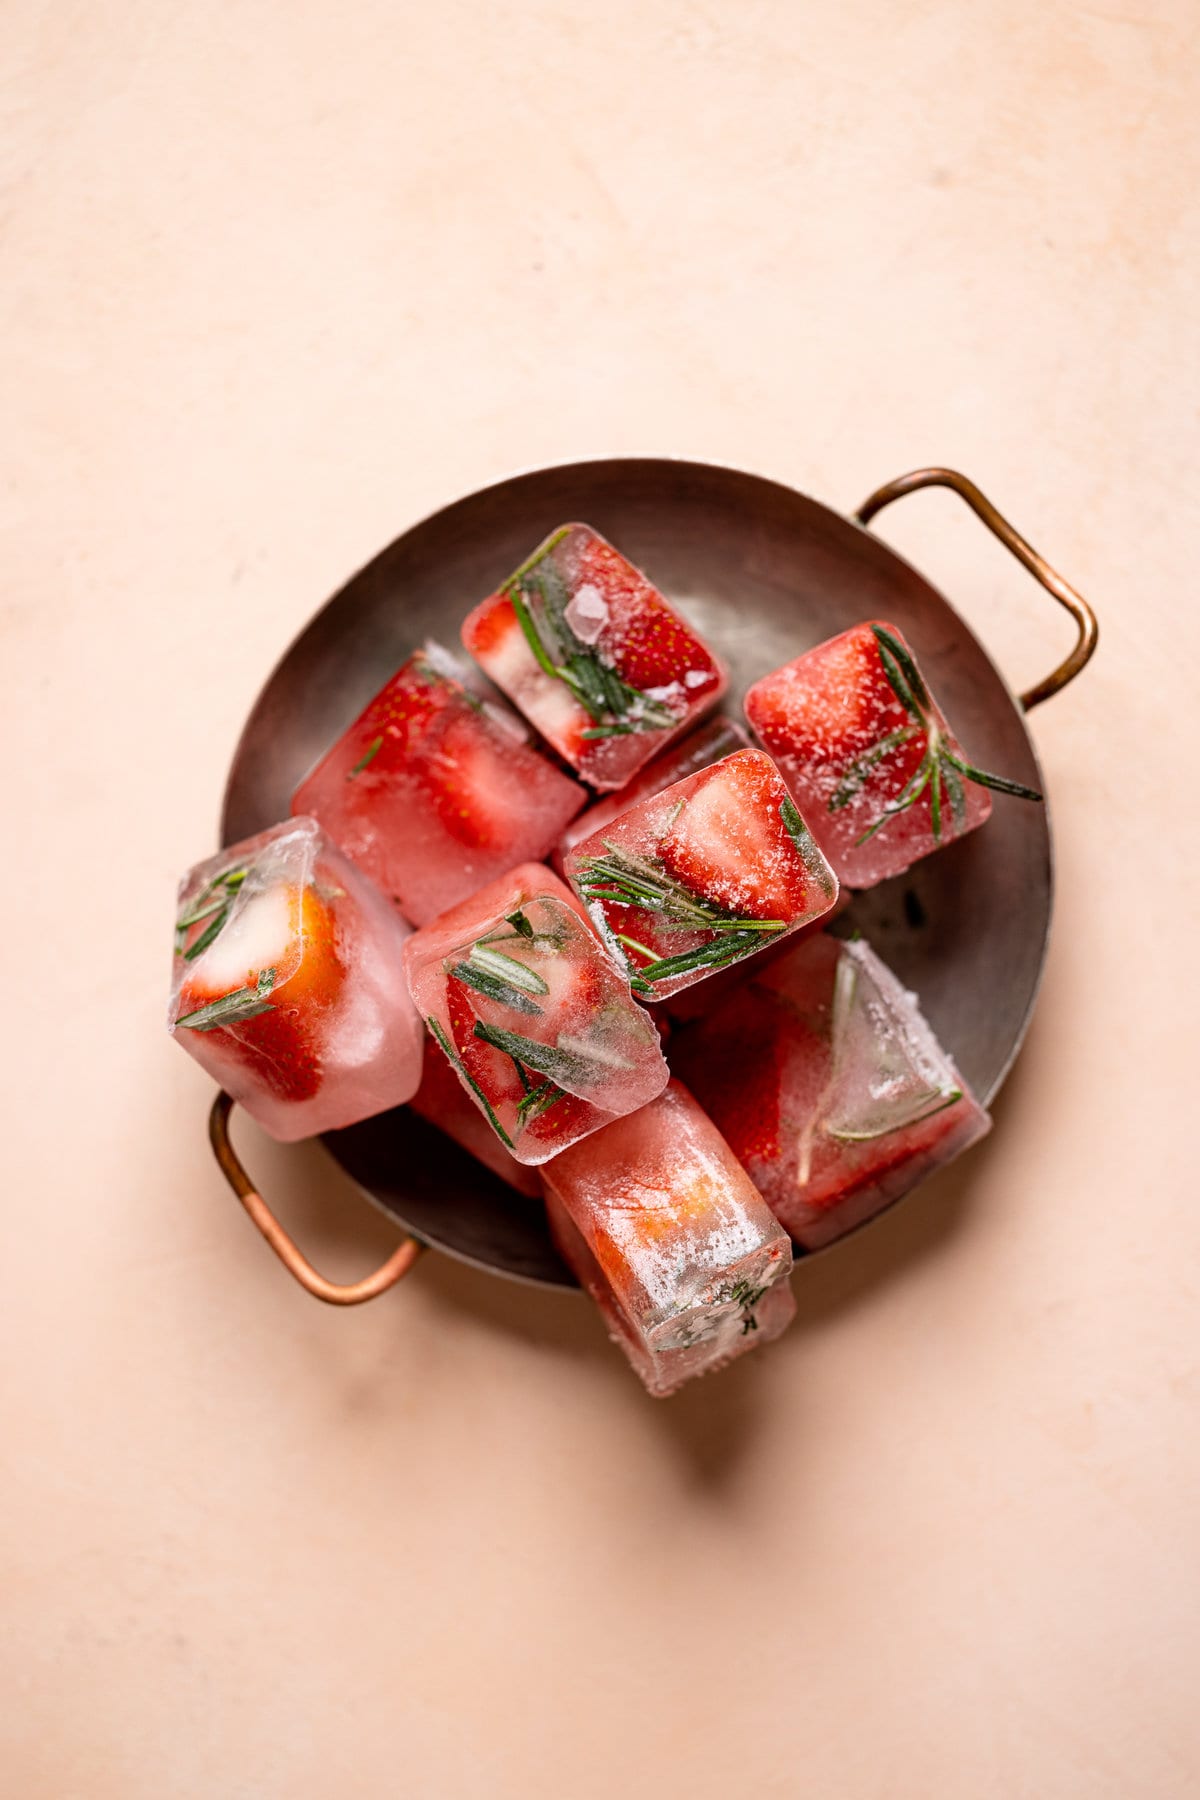 Strawberry Grapefruit Mocktail